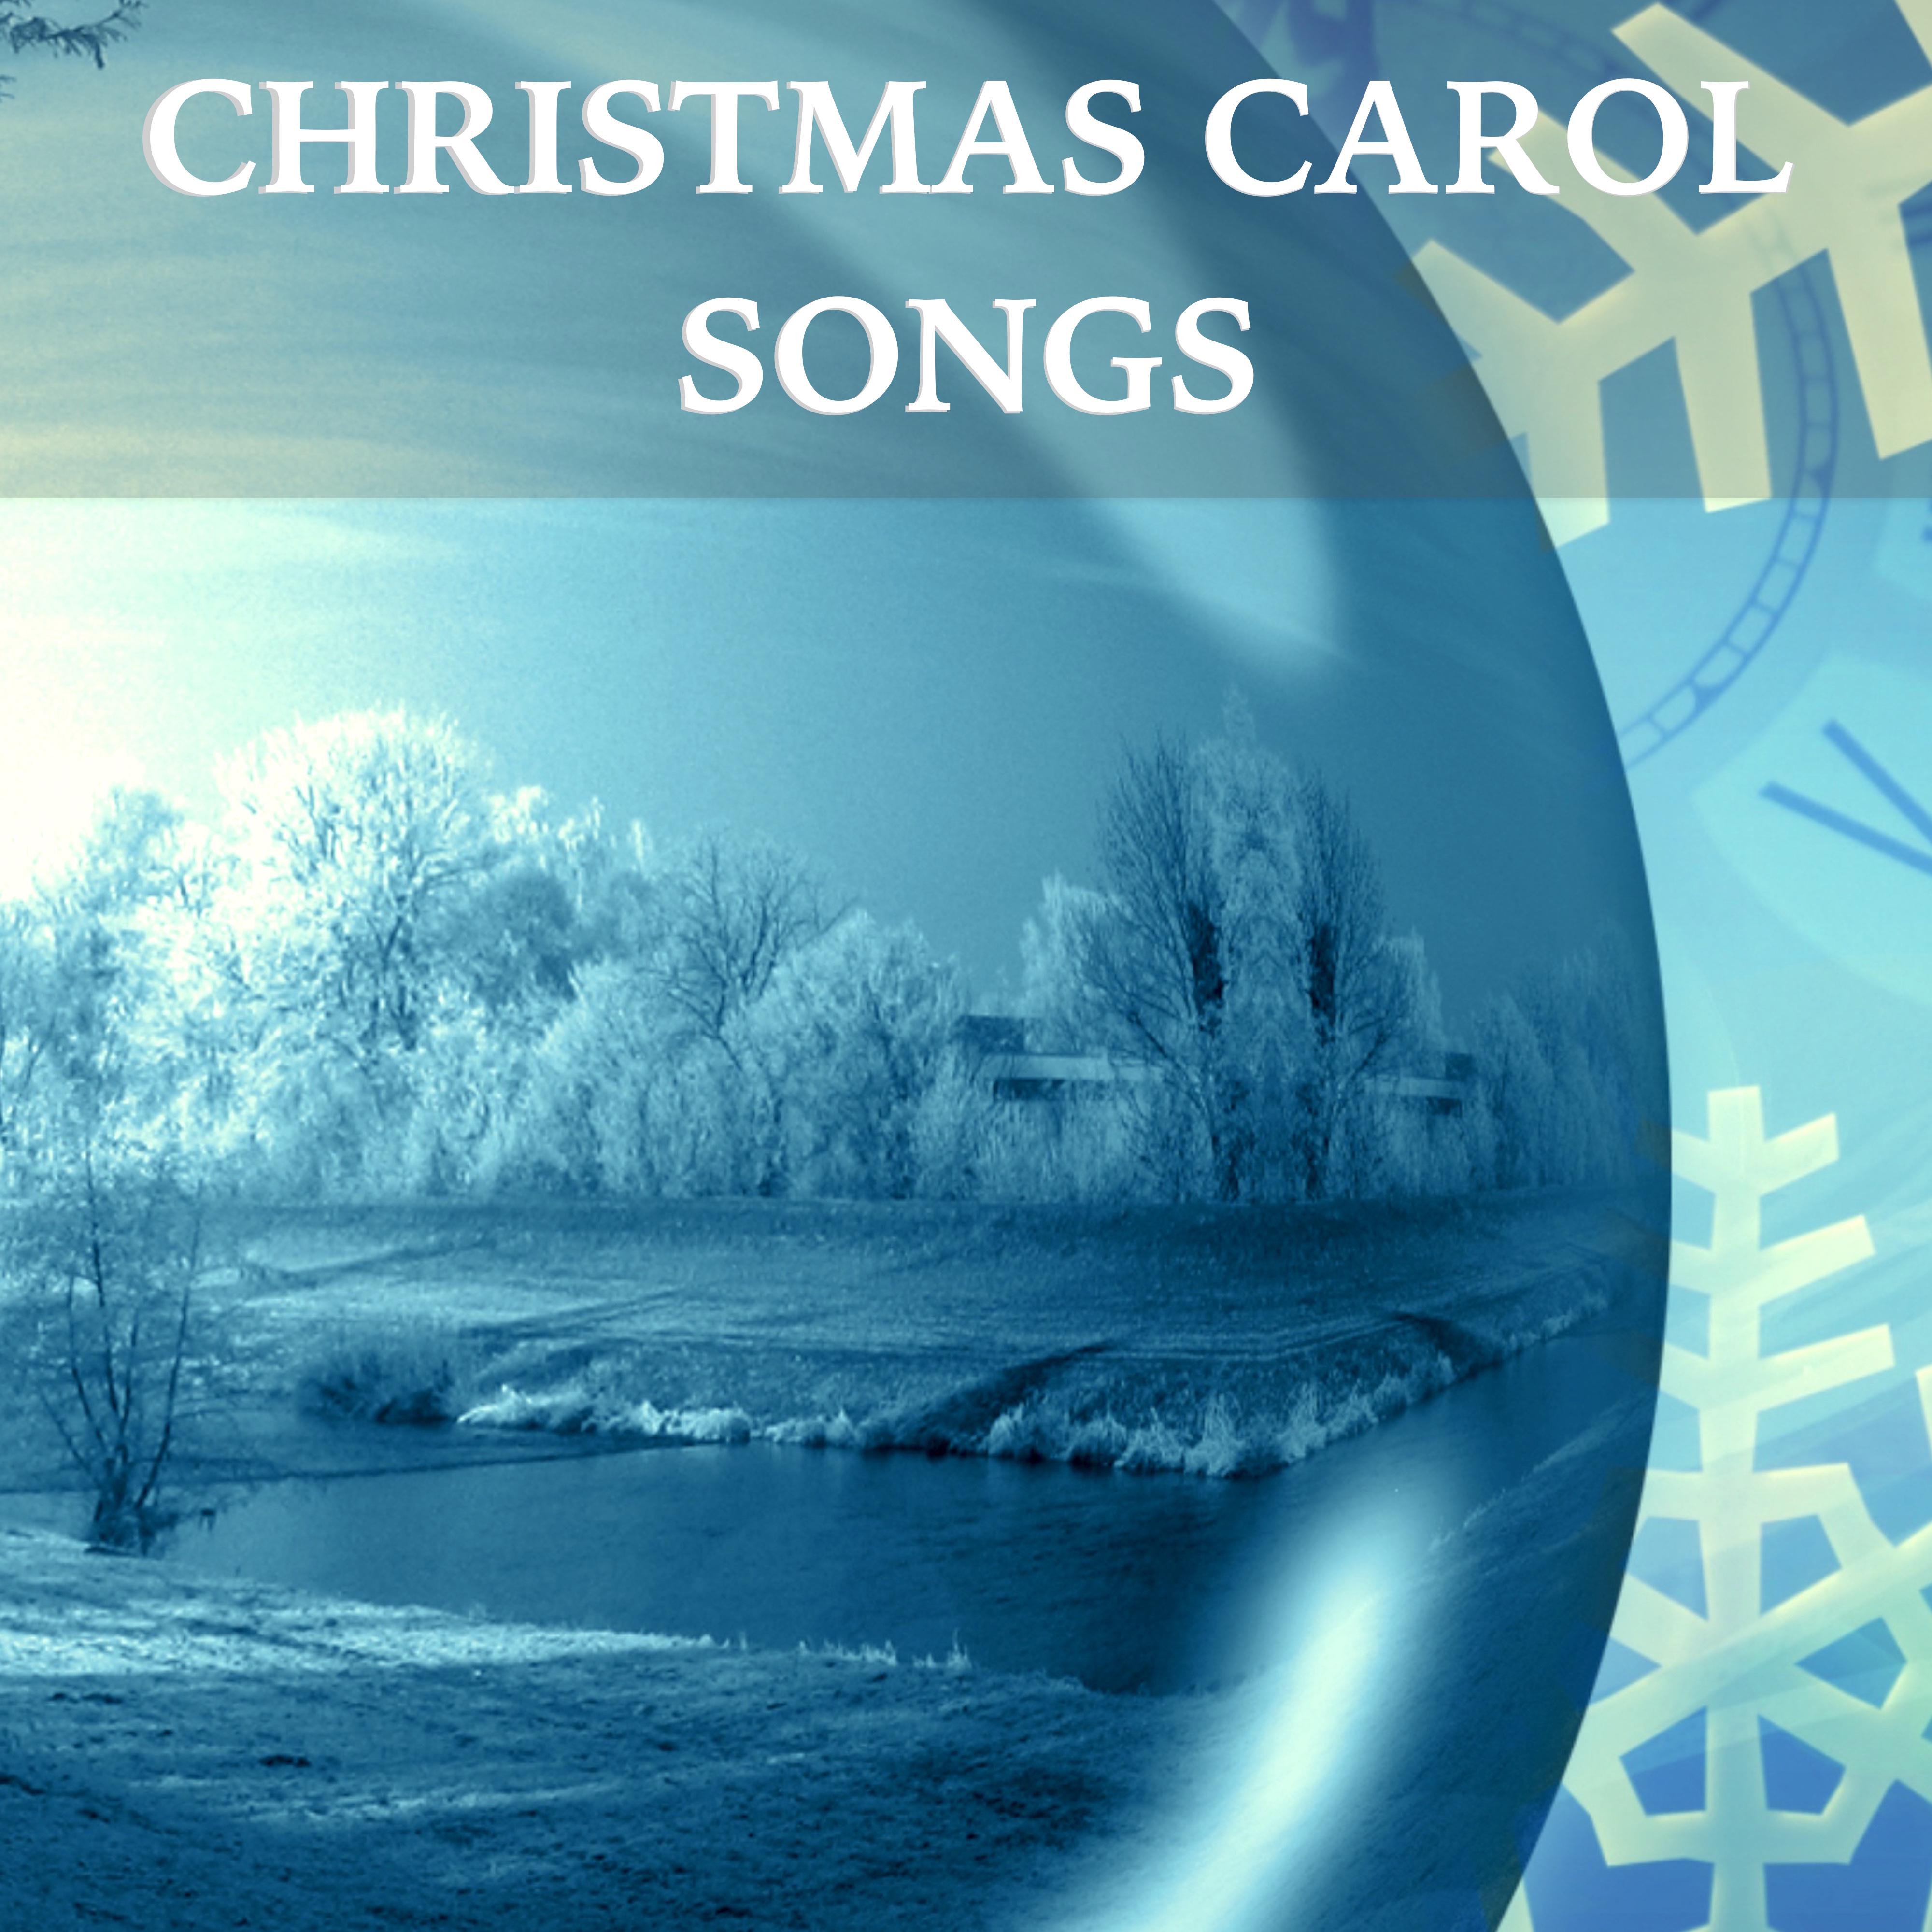 Christmas Carol Songs: Best Kids Christmas Songs & Christmas Lullabies to Sleep through the Christmas Night